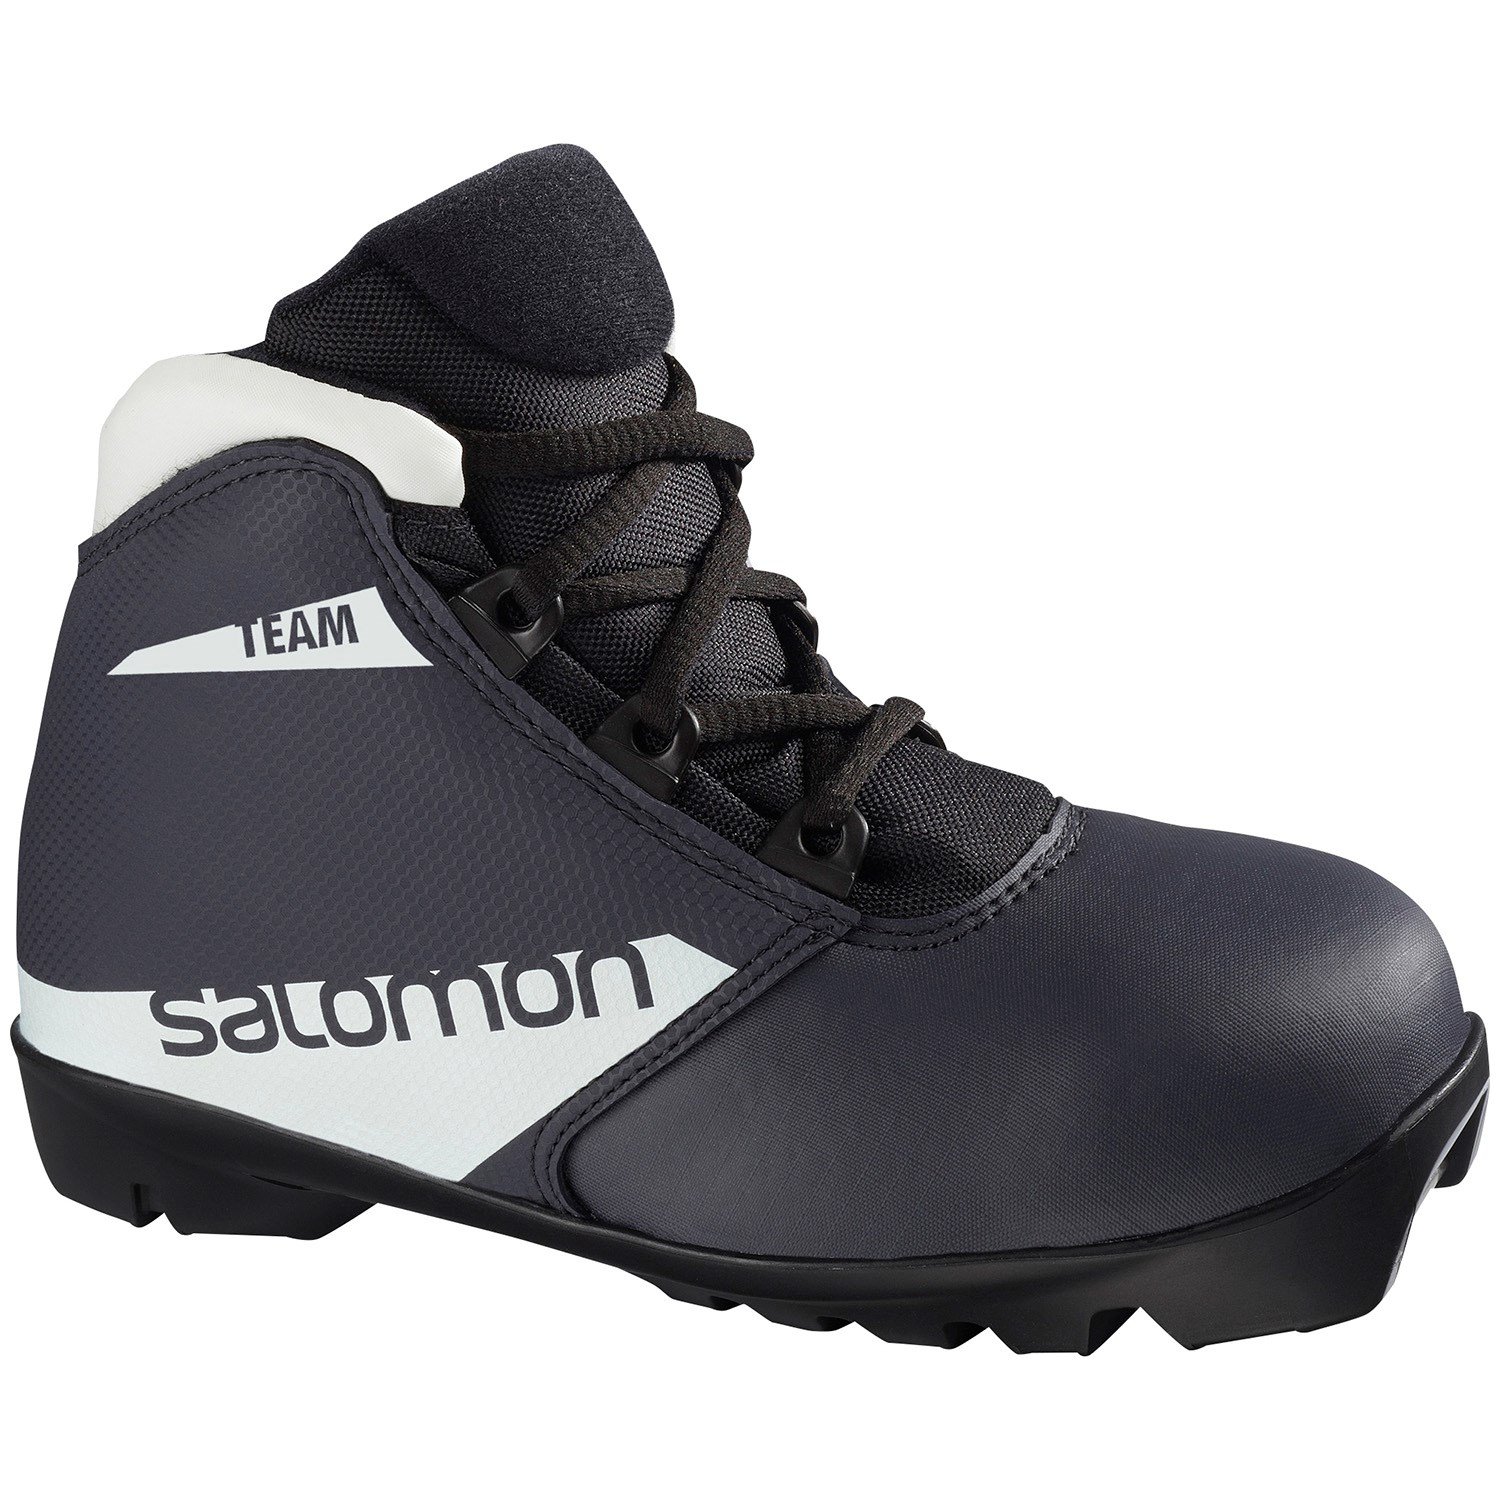 Salomon Team Jr Classic Cross Country Ski Boots - Kids' 2021 | evo